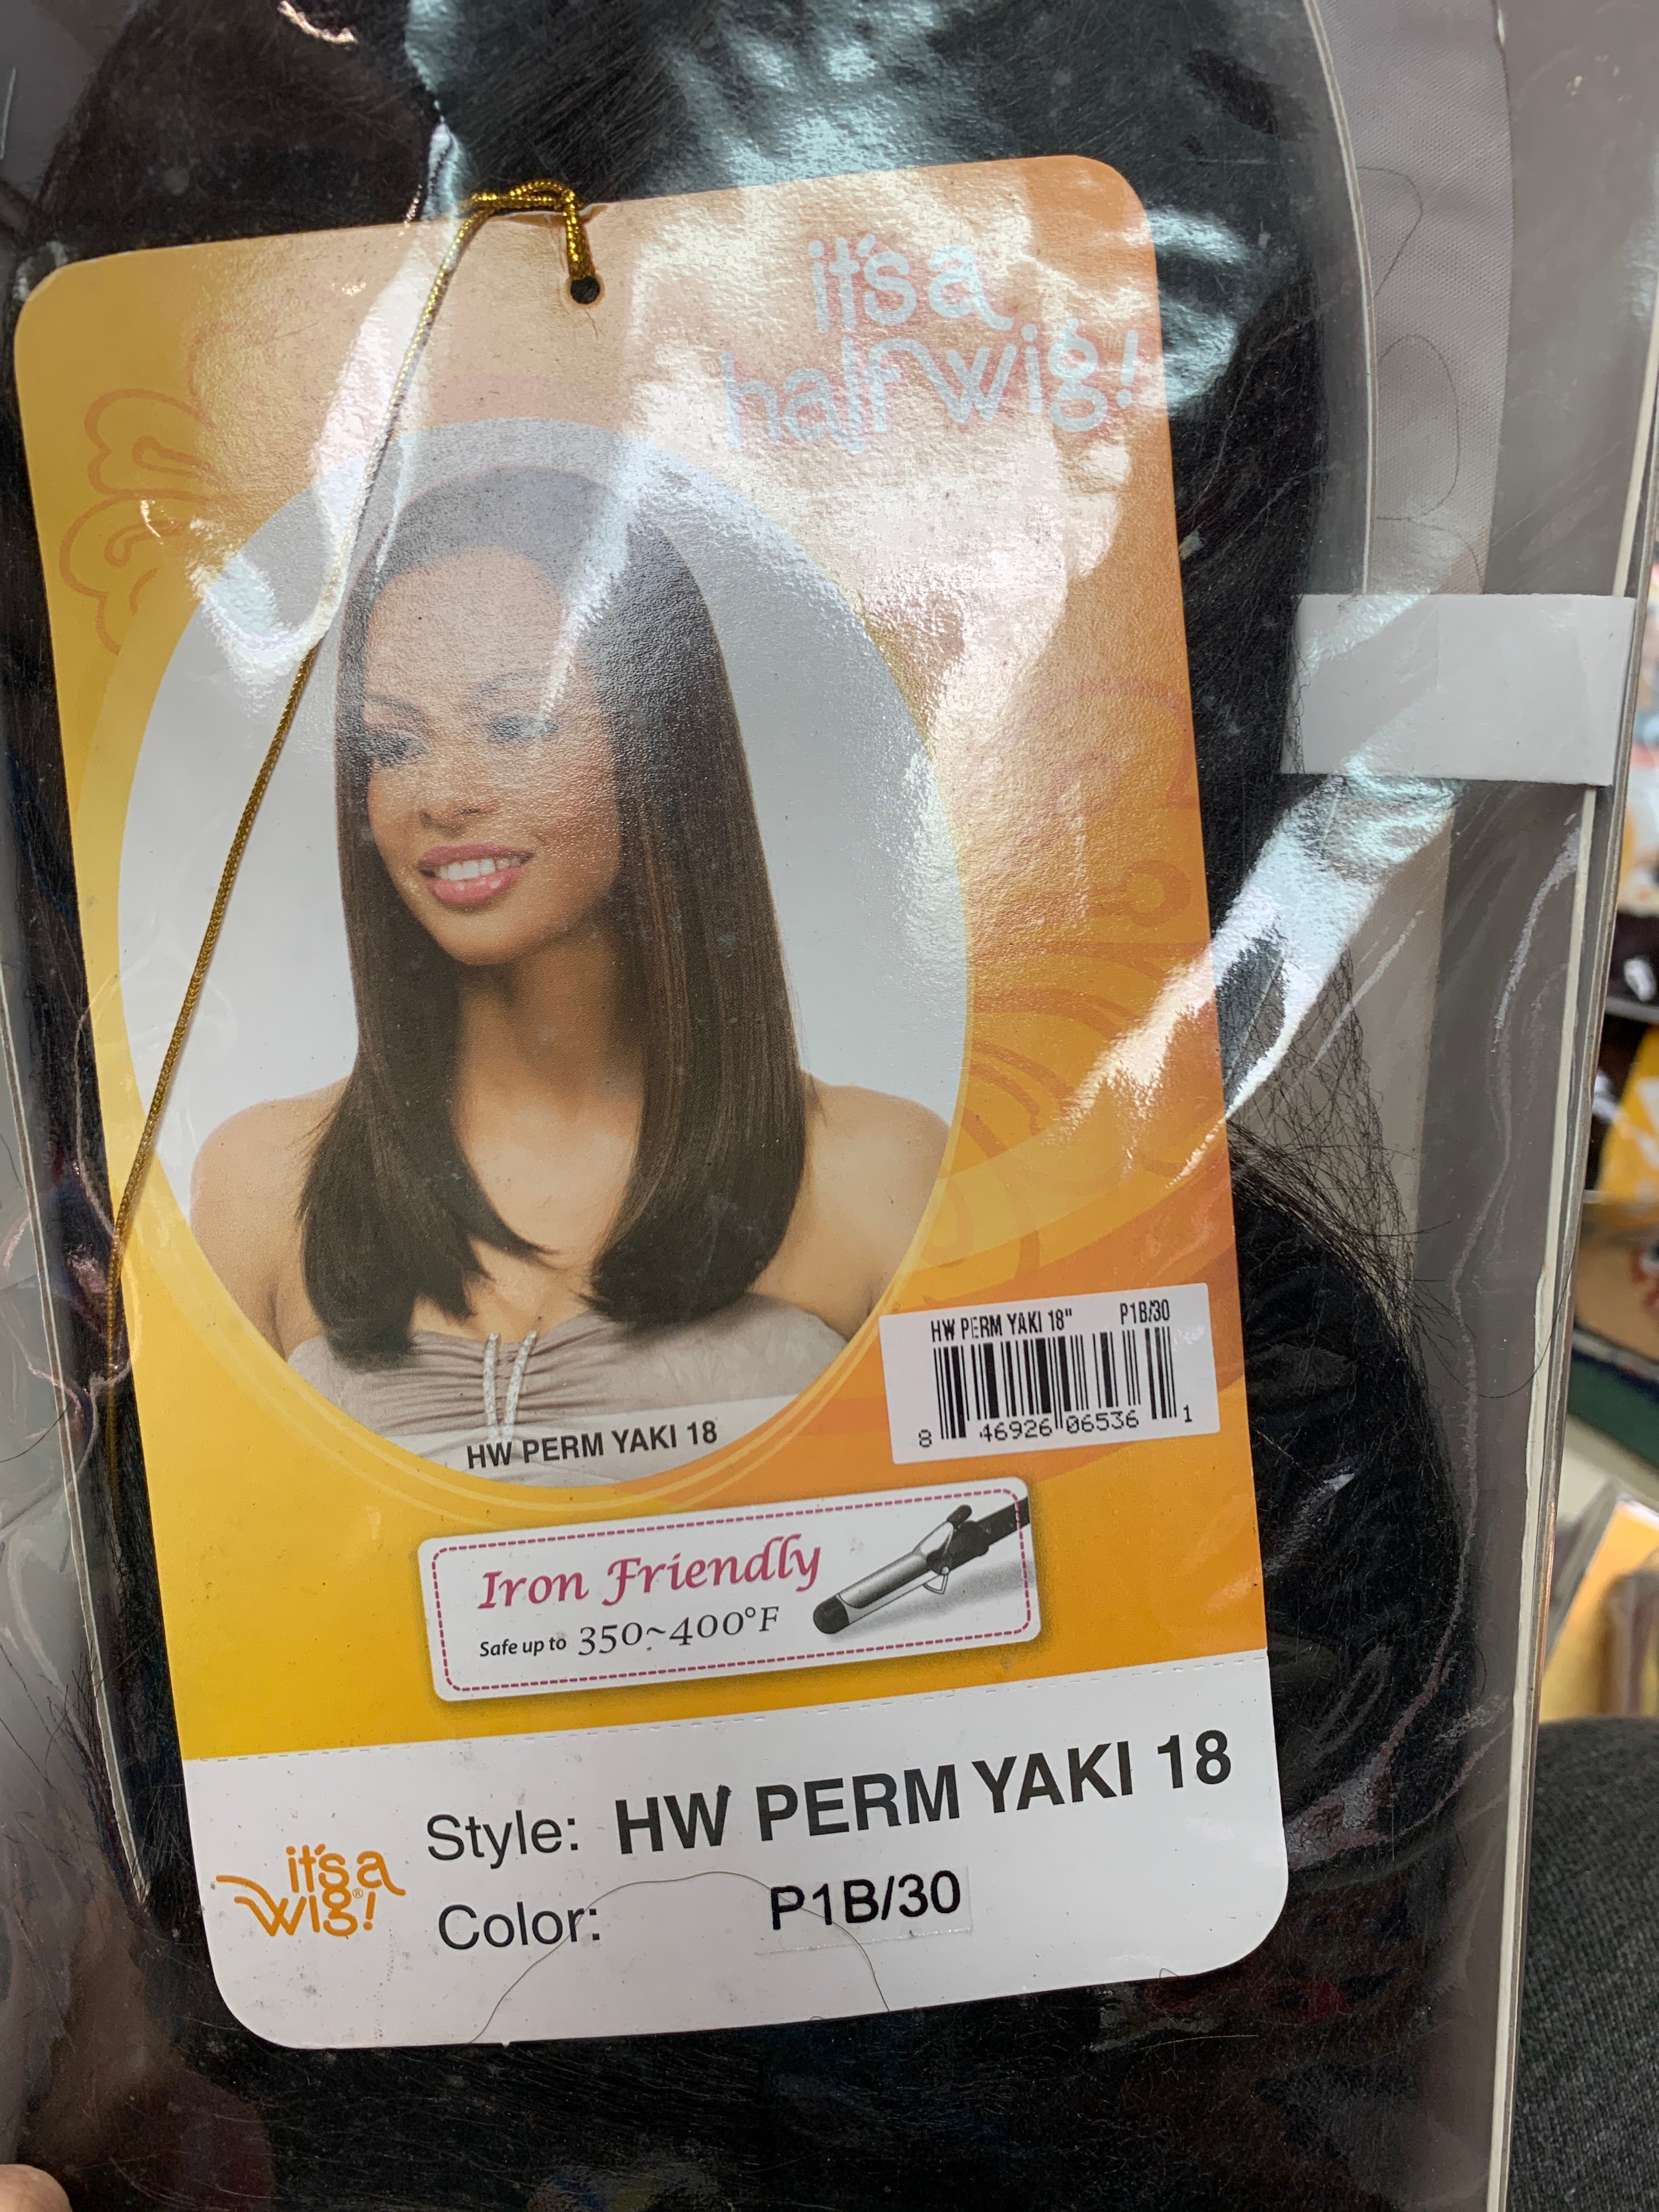 It’s a wig hw perm yaki 18”